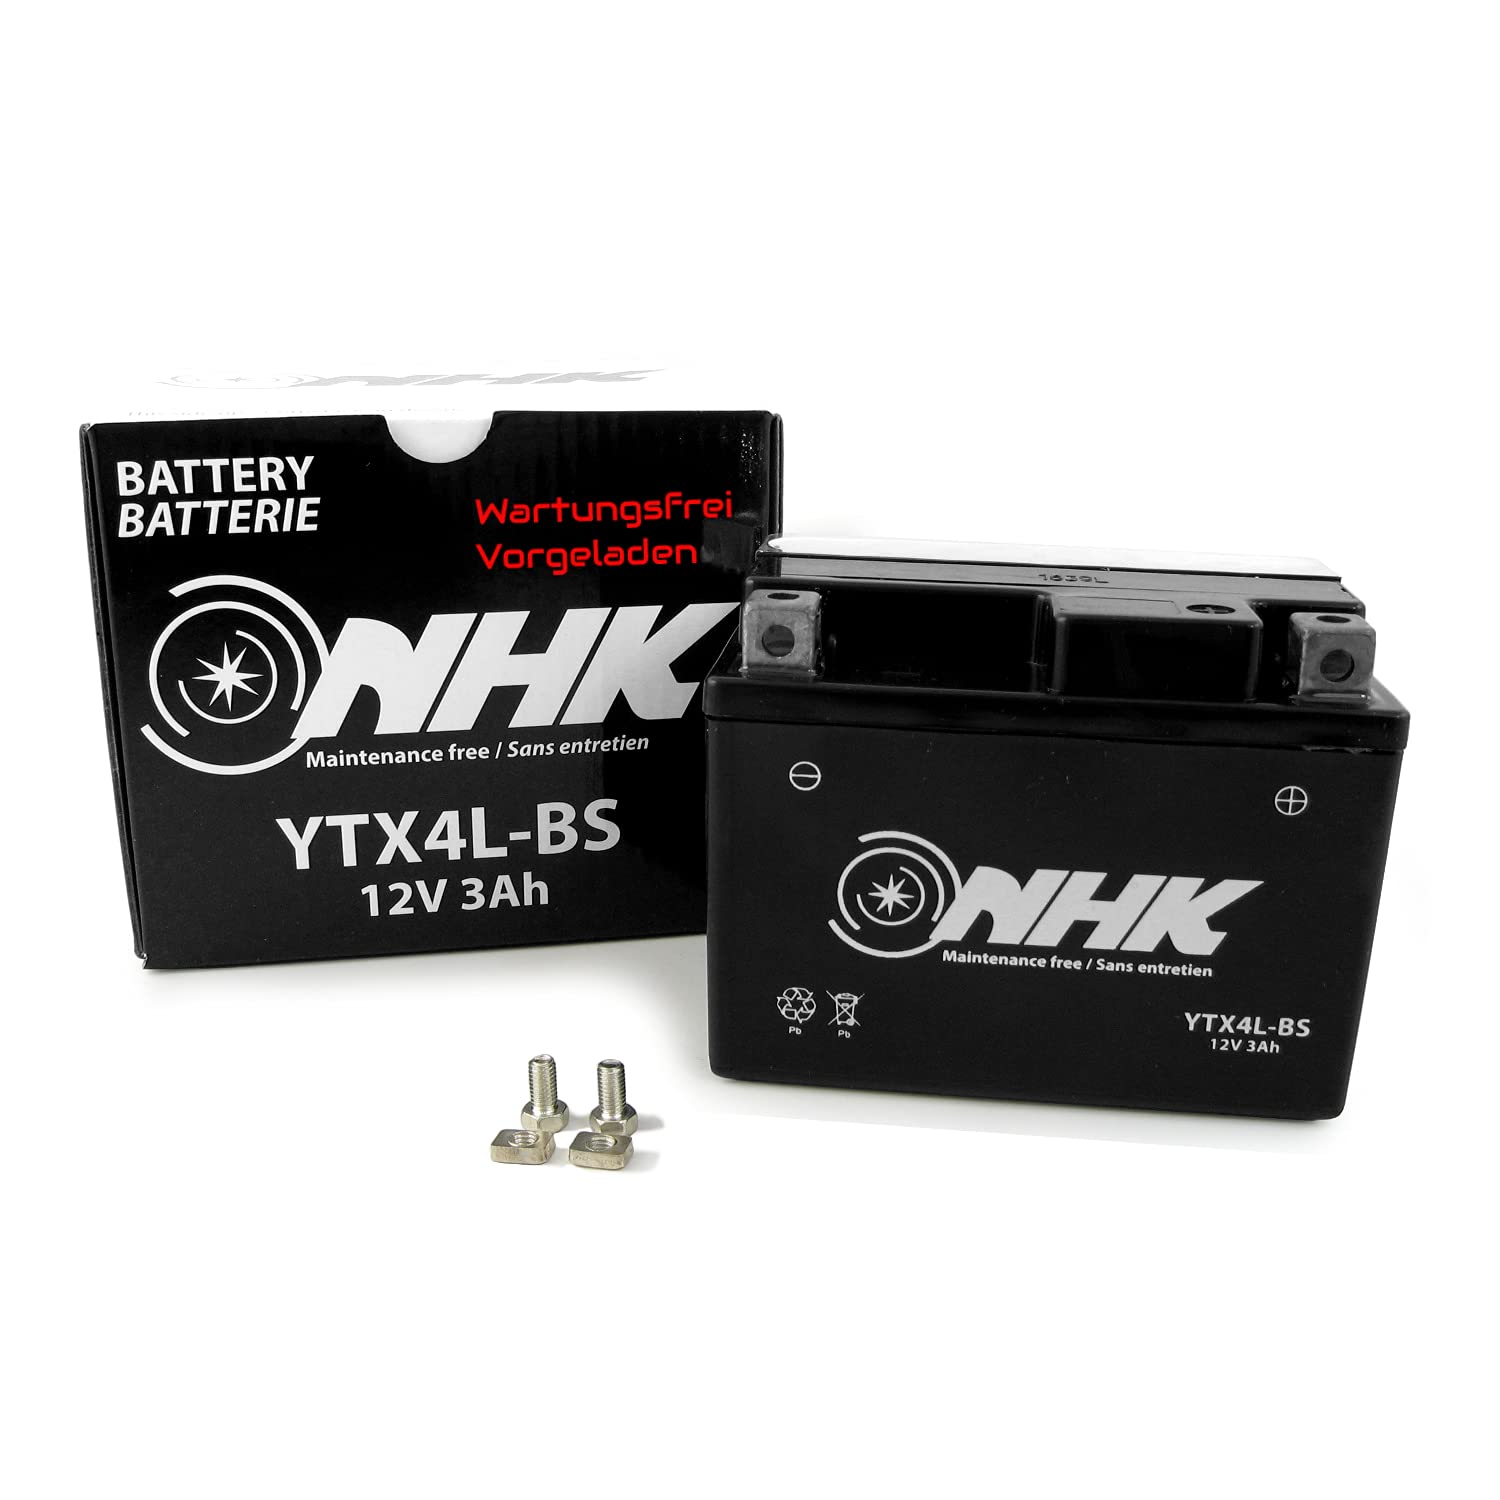 Wartungsfreie Batterie YTX4L-BS 3Ah kompatibel Yamaha Aprilia MBK Gilera (NHK) von Area1